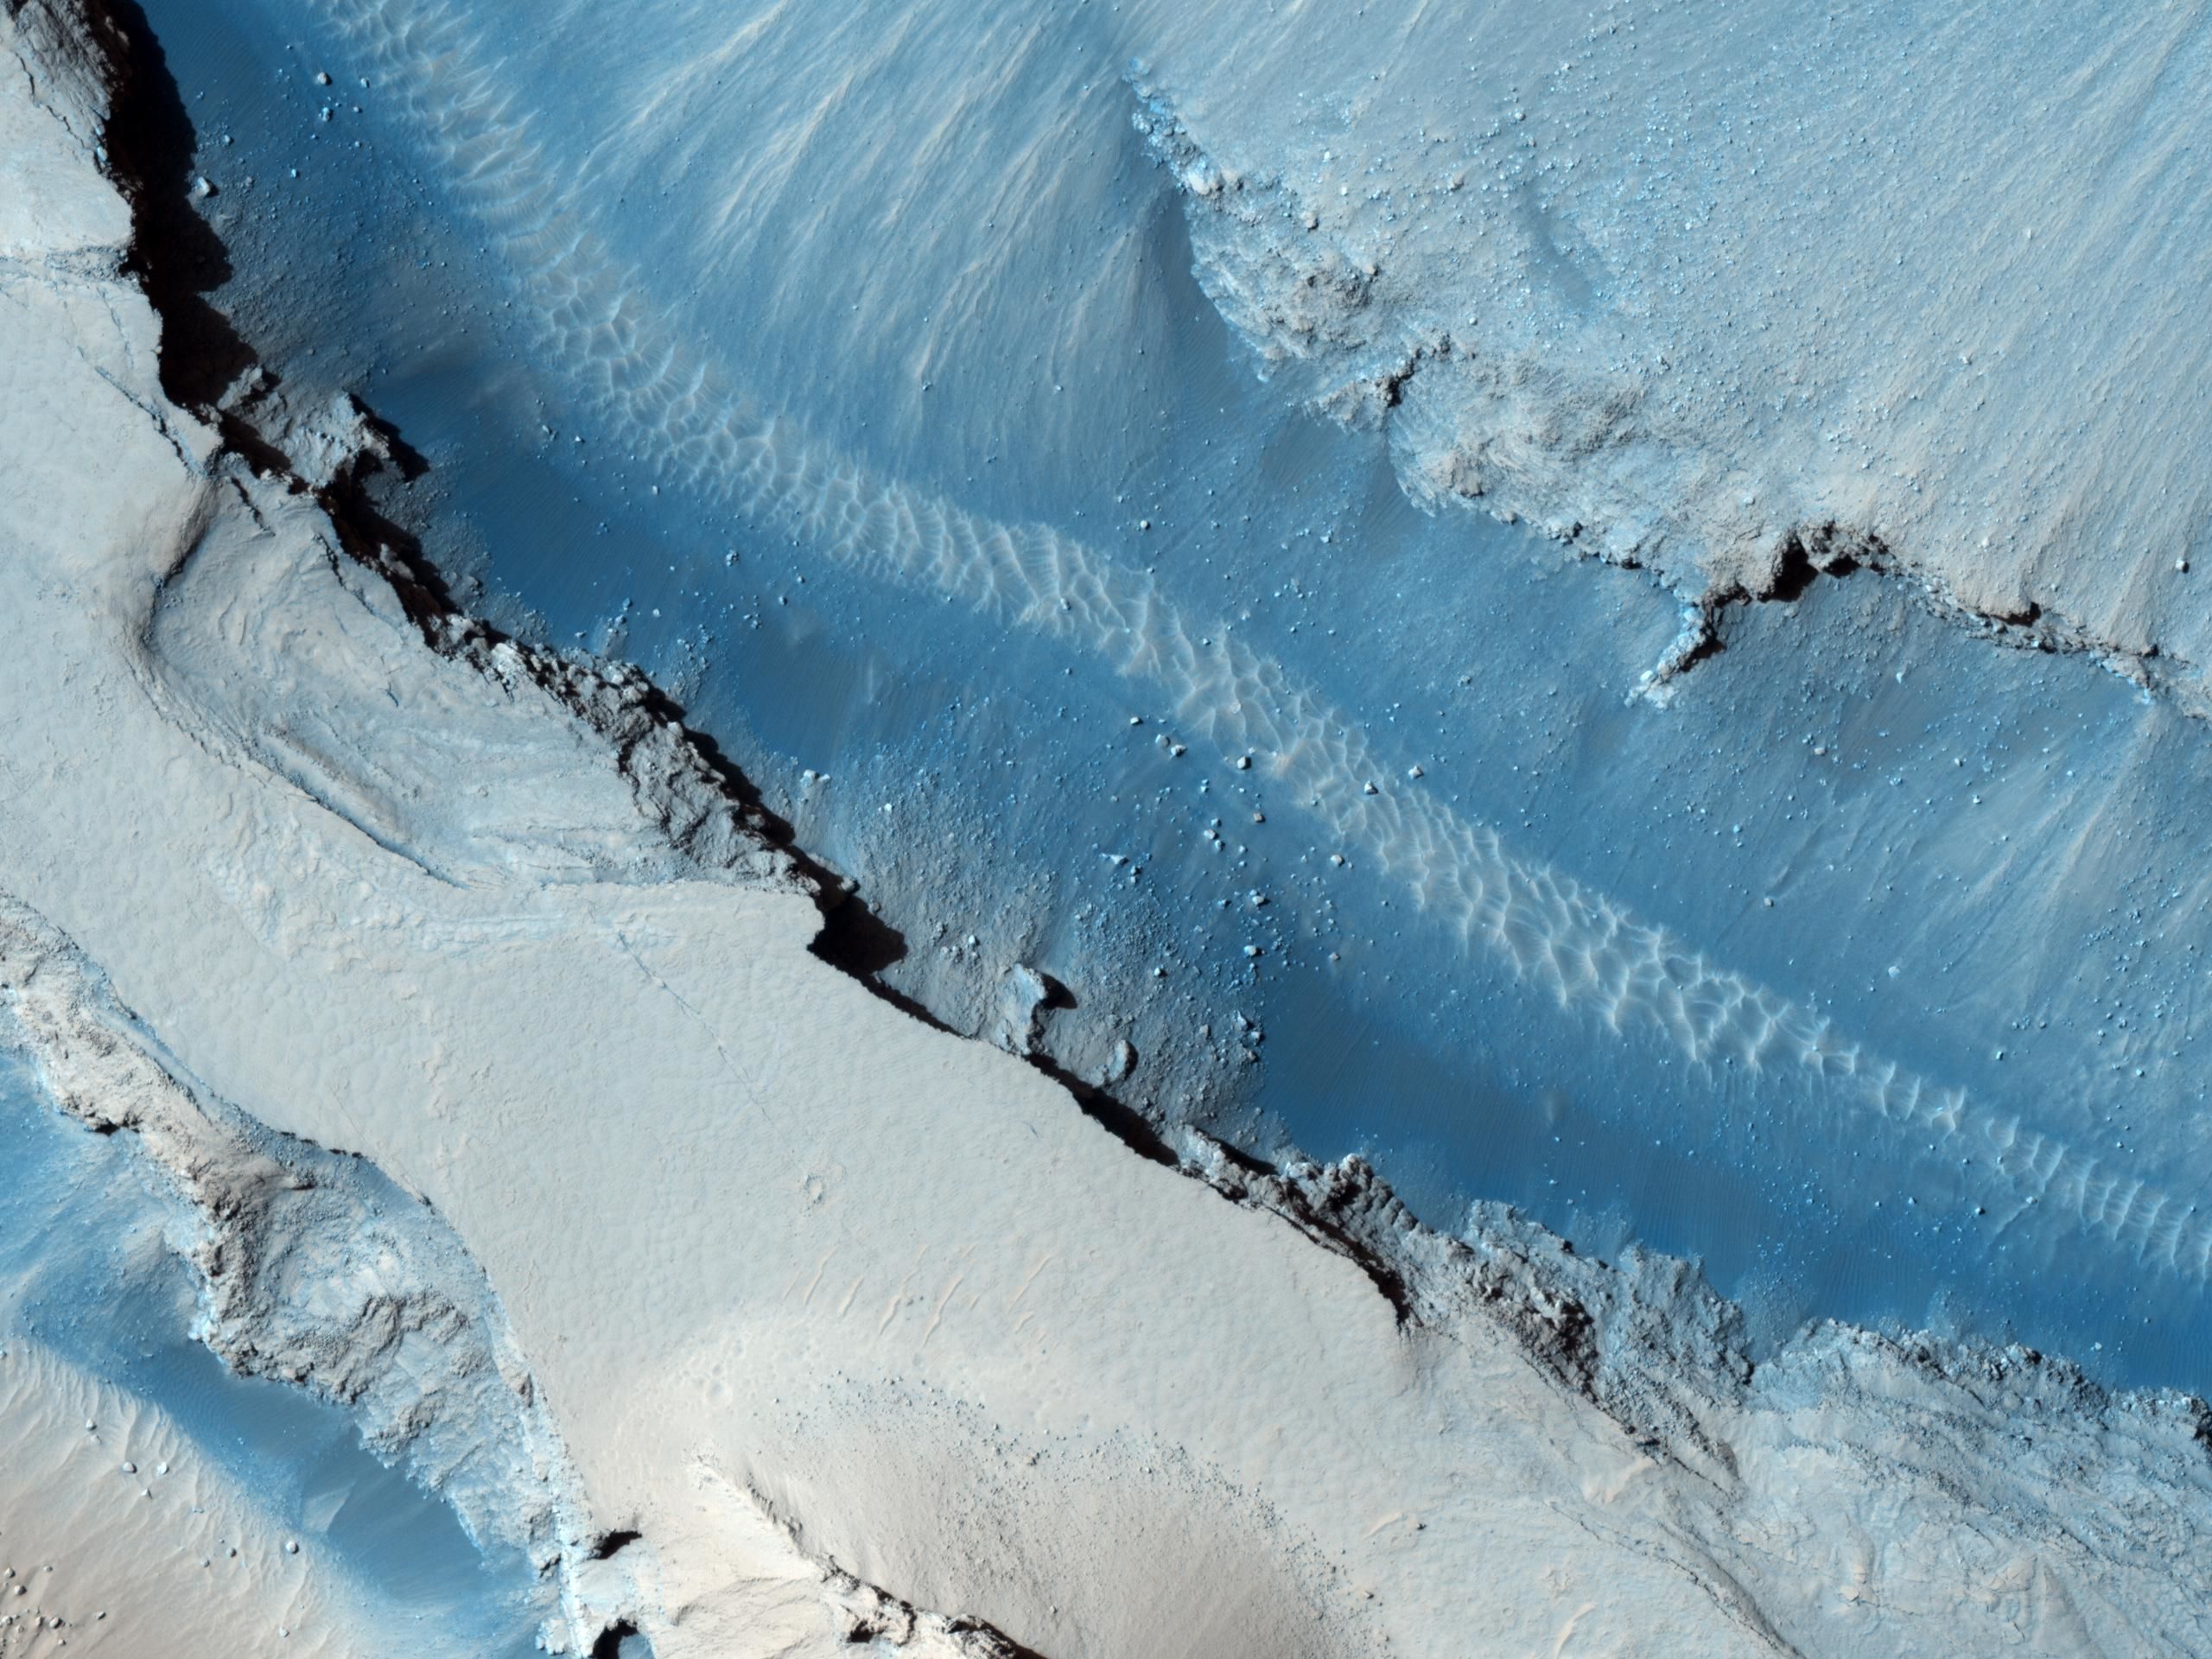 Sand dunes ripple across the floor of a graben in Cerberus Fossae on Mars in this enhanced color image (Mars is dark grey and ochre, not blue). Credit: NASA/JPL-Caltech/University of Arizona